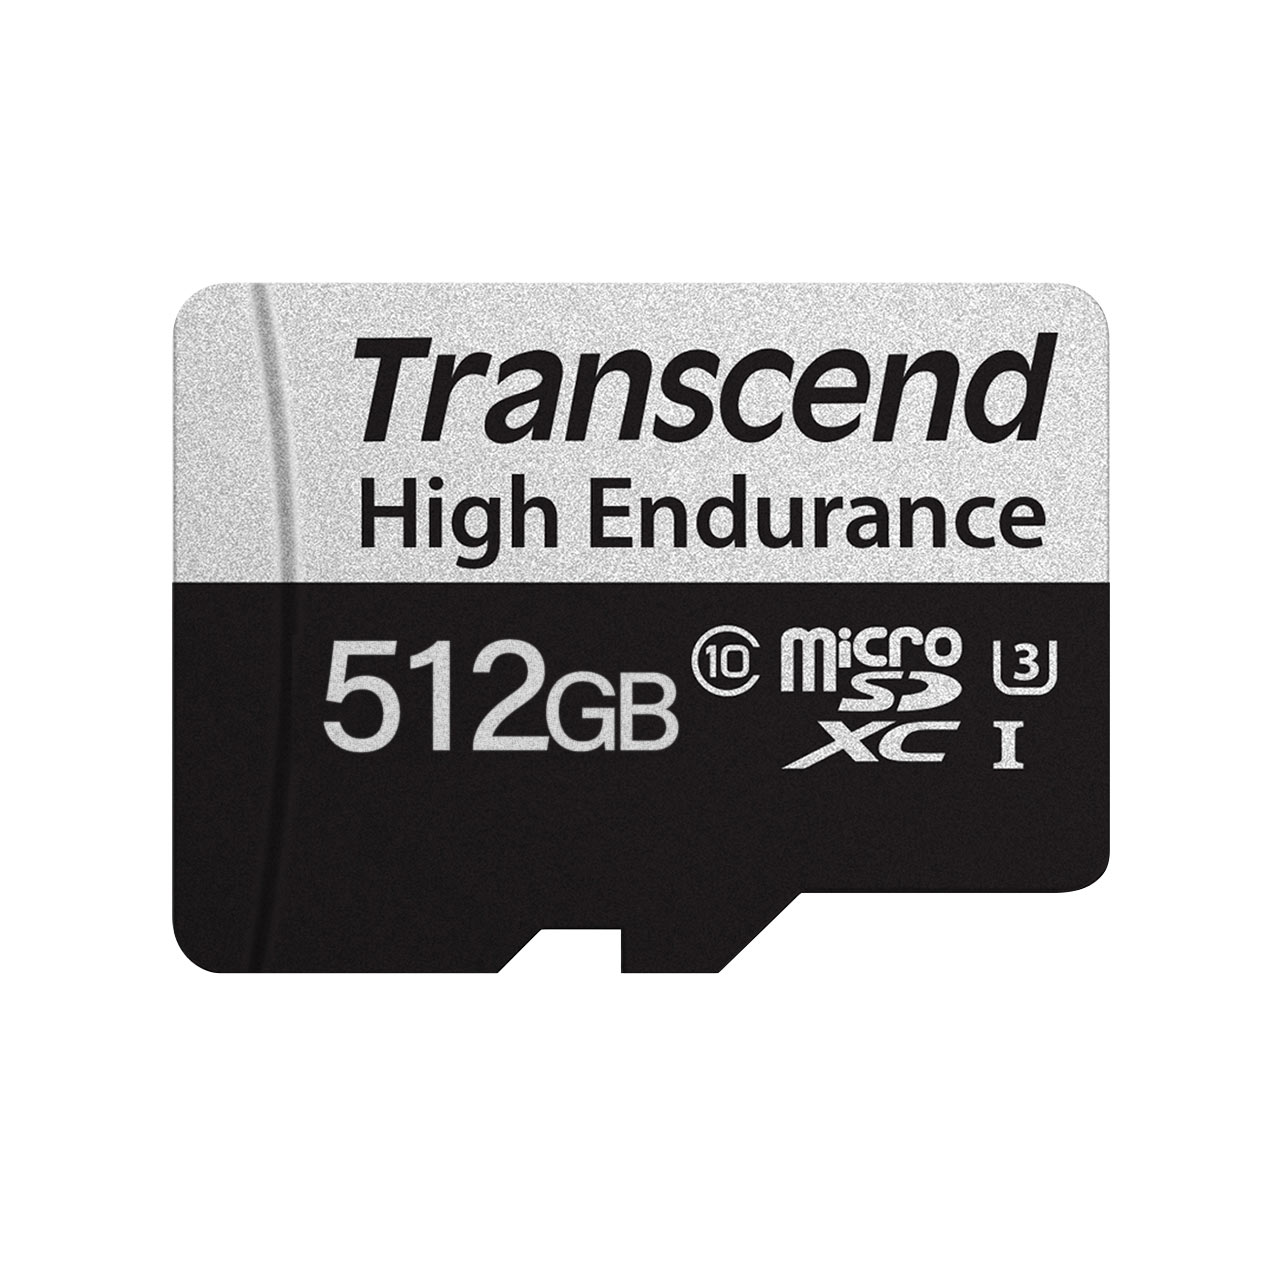 microSDXCカード 512GB Class10 UHS-I U3 高耐久 SDカード変換アダプタ